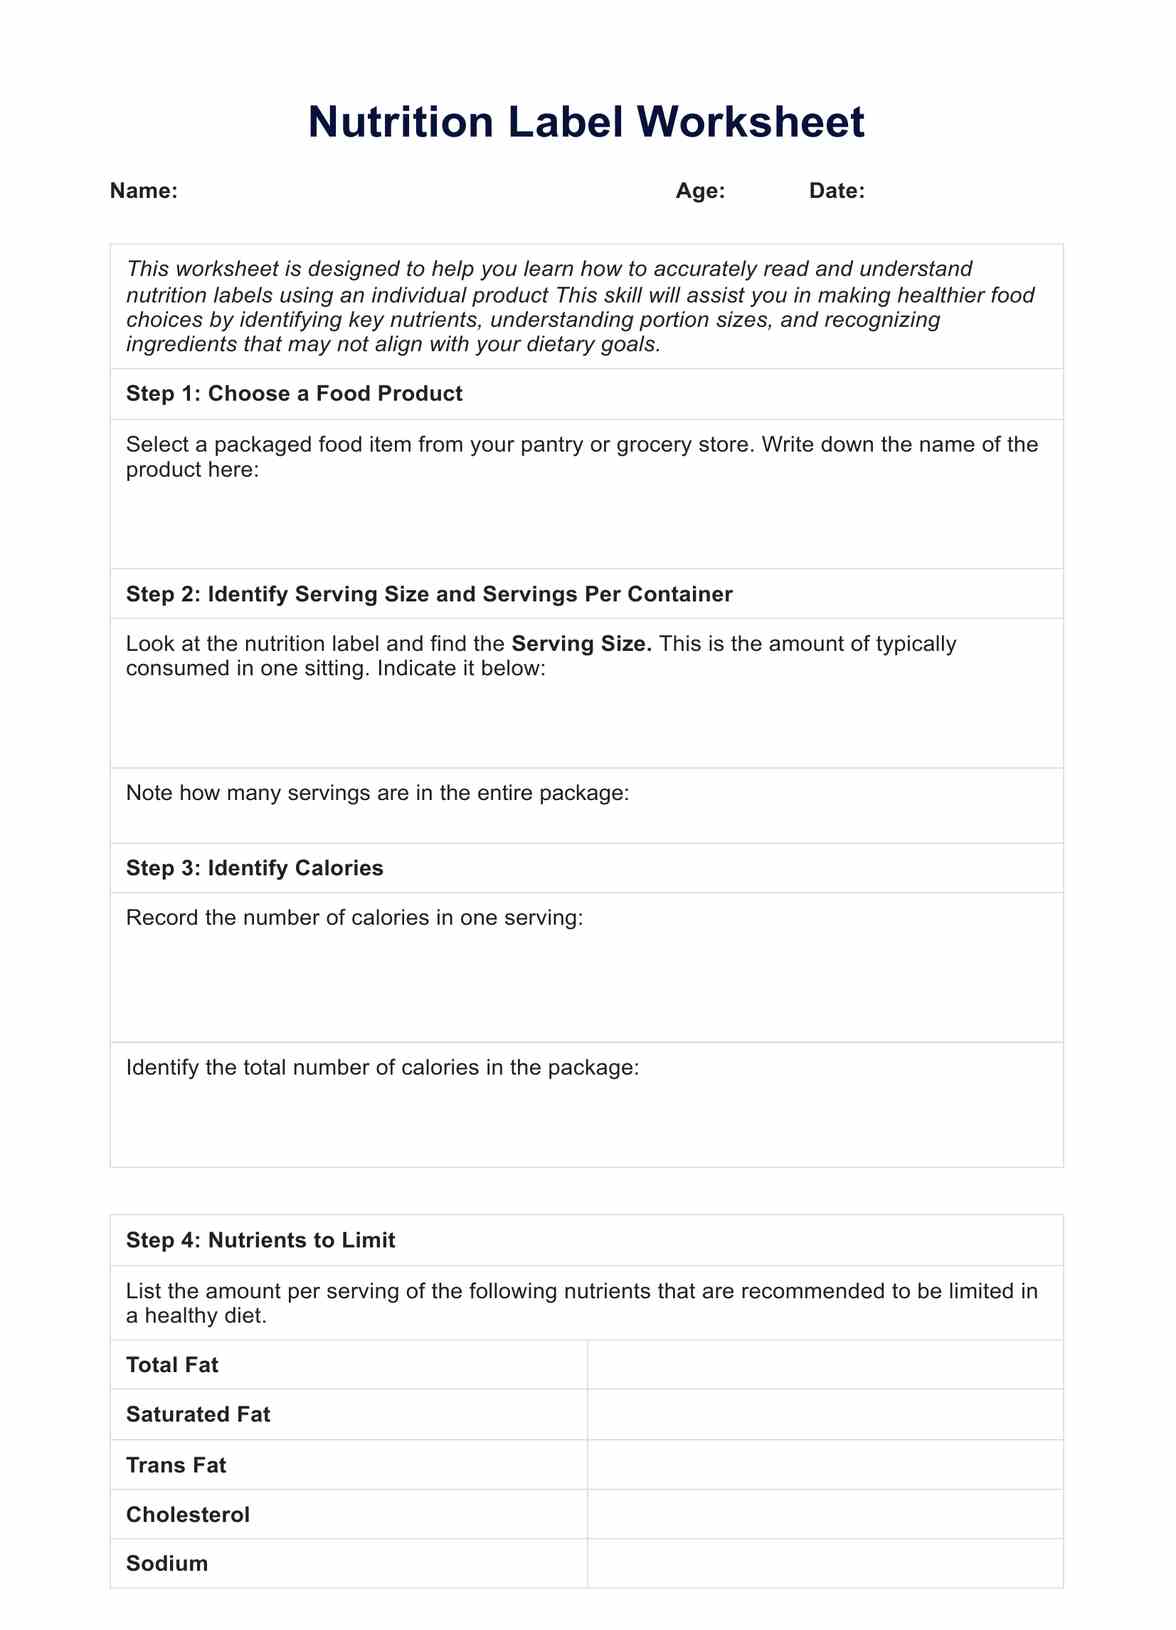 Nutrition Label Worksheet PDF Example